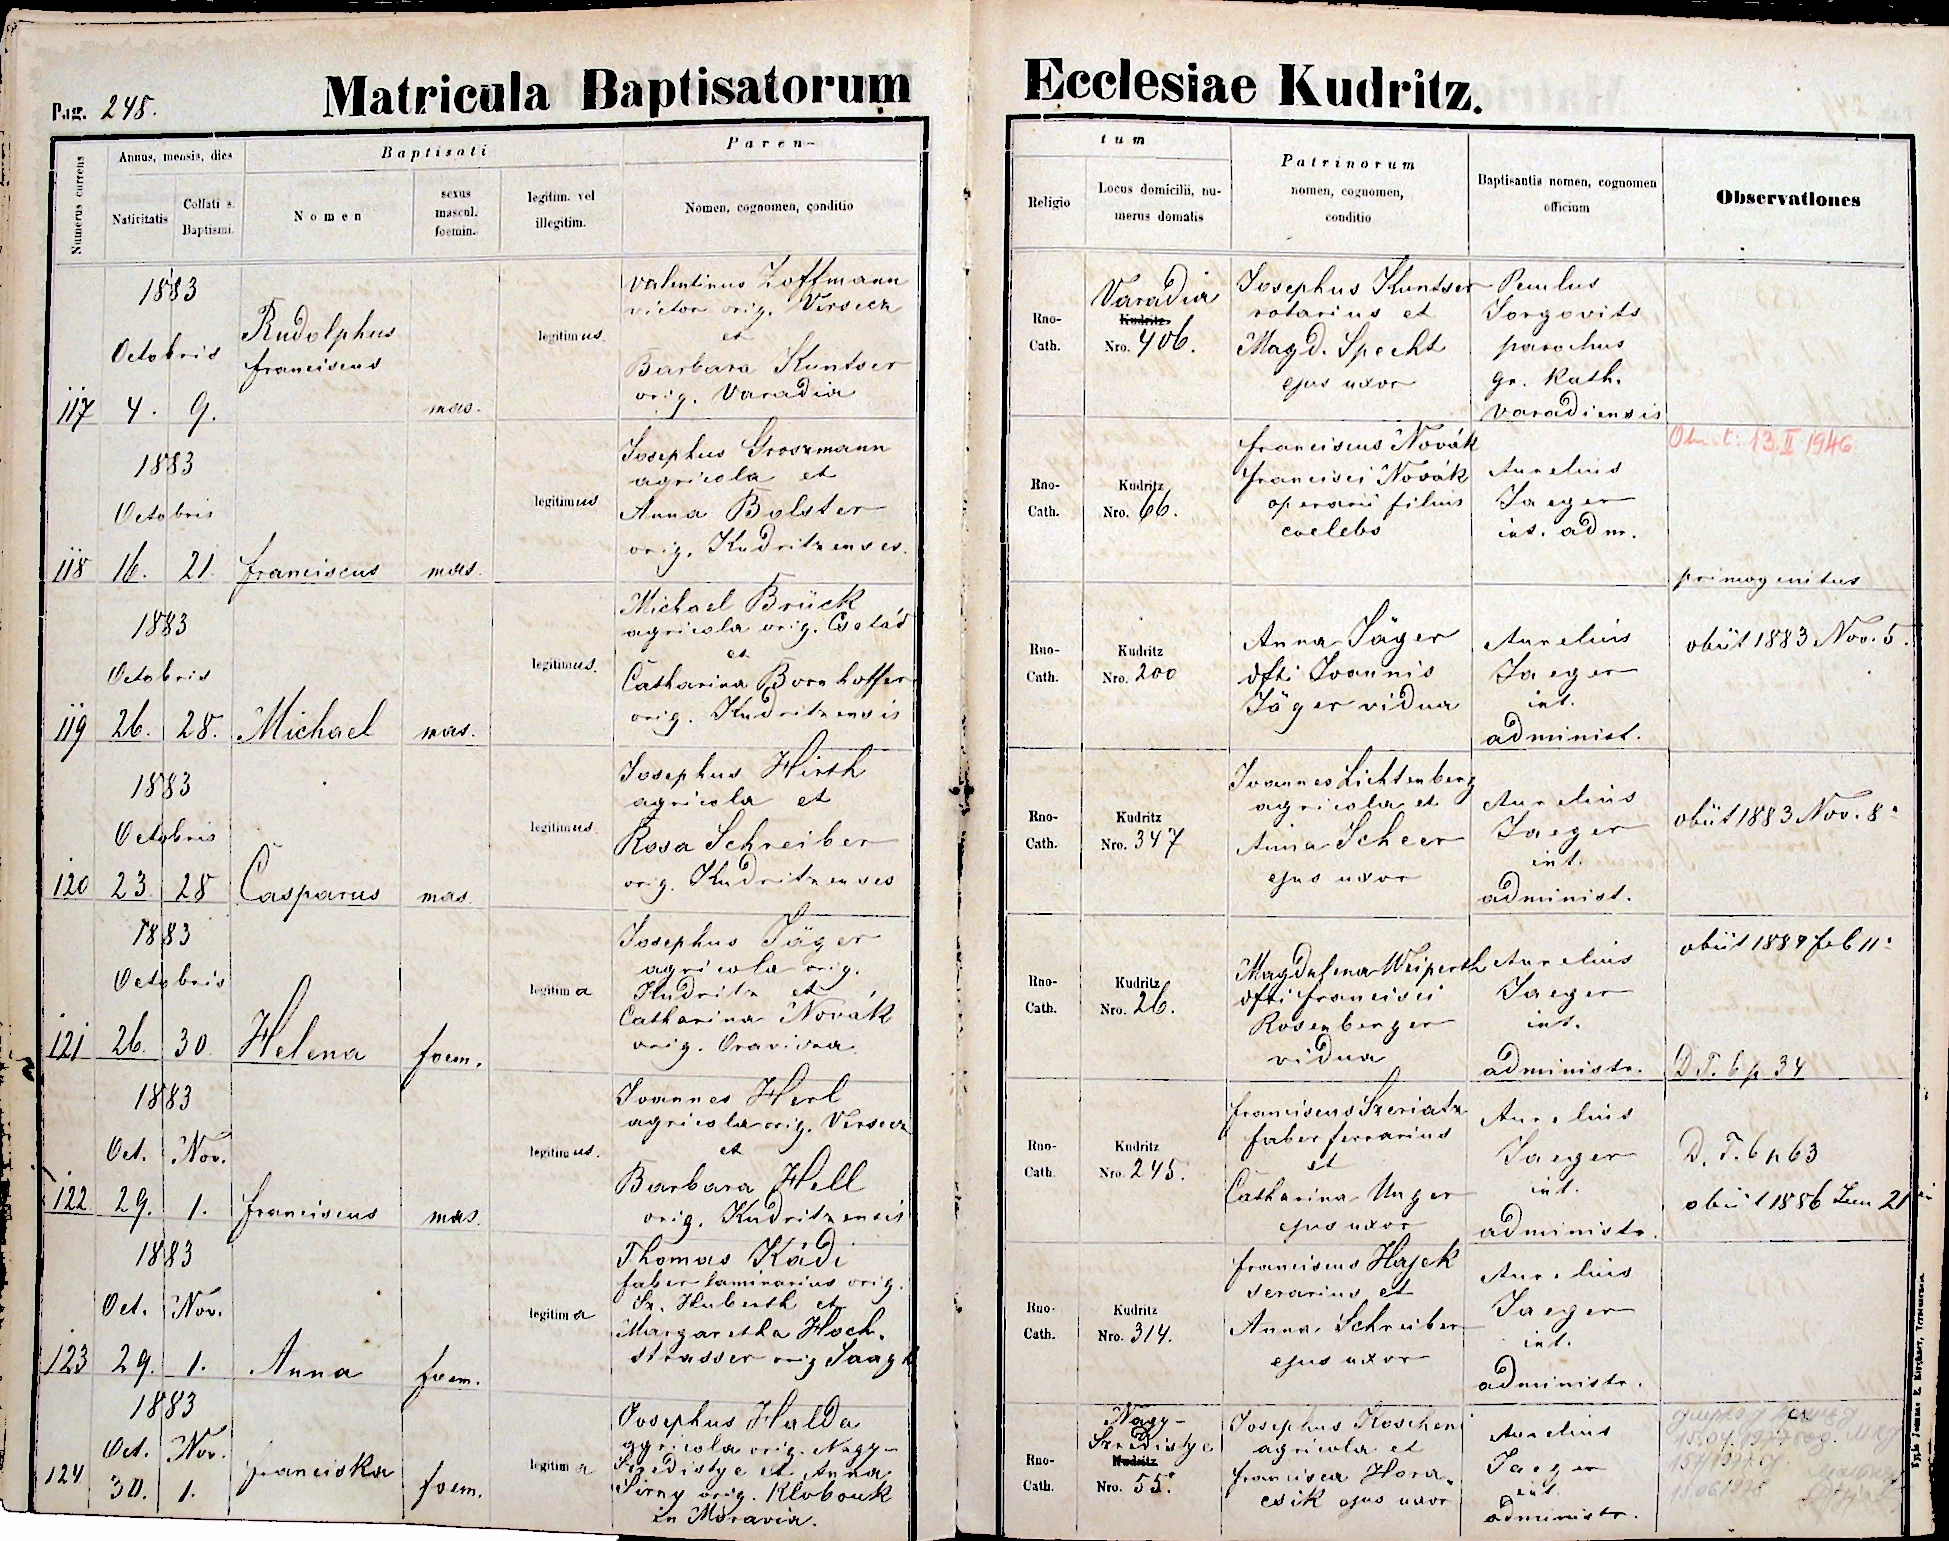 images/church_records/BIRTHS/1880-1883B/1883/248